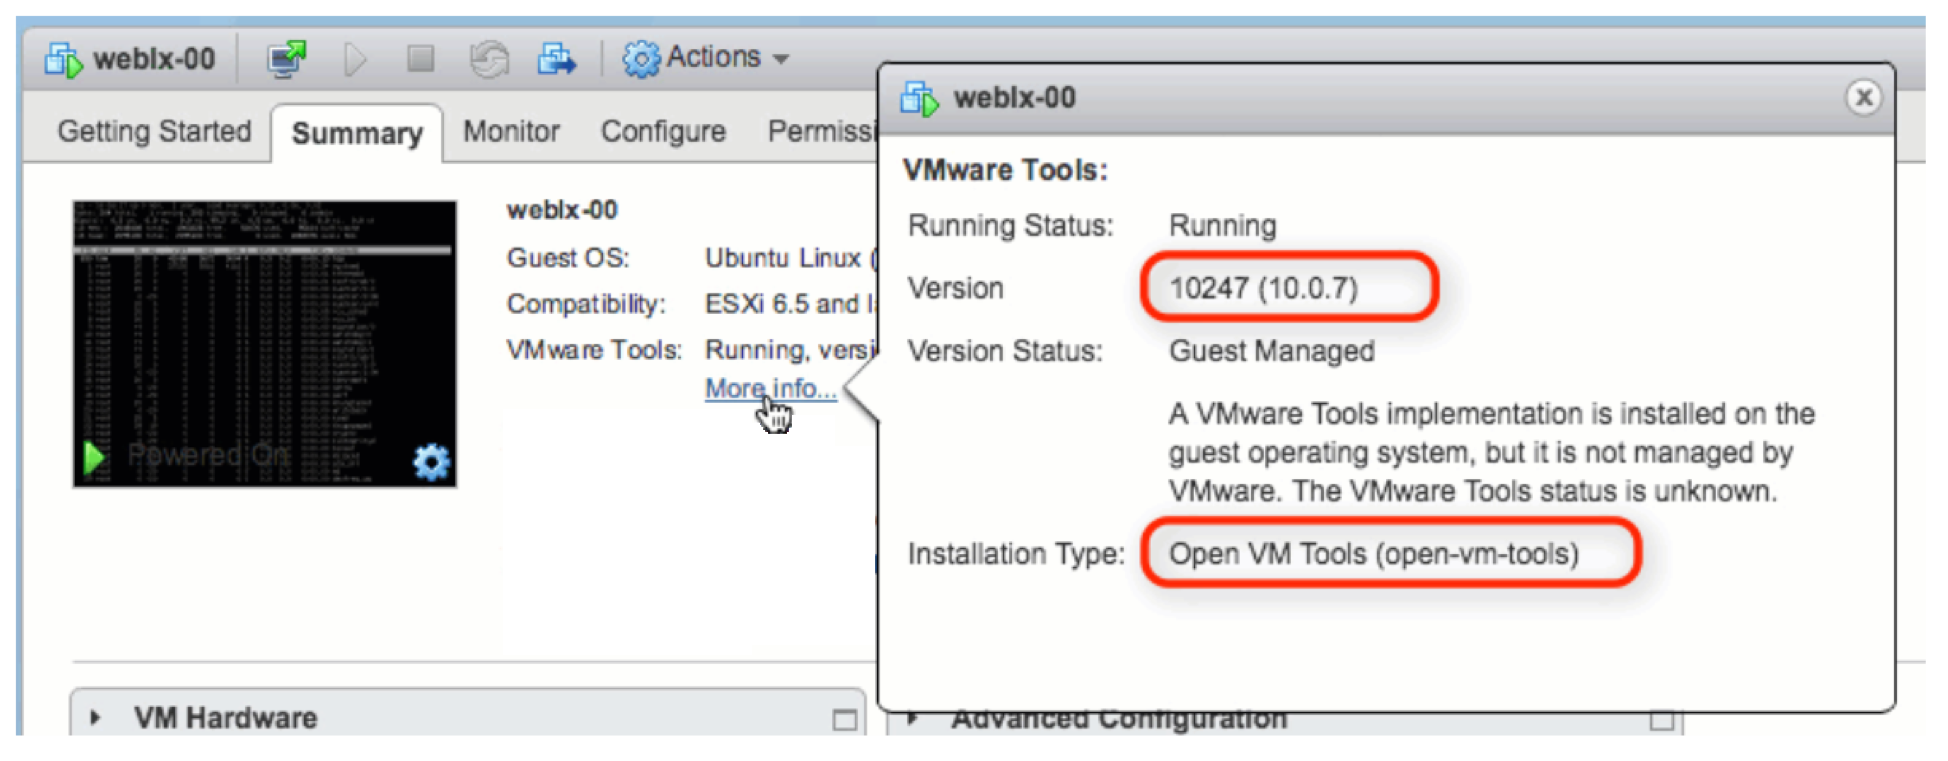 VMware Tools for VMware vSphere 6.5 | StarWind Blog